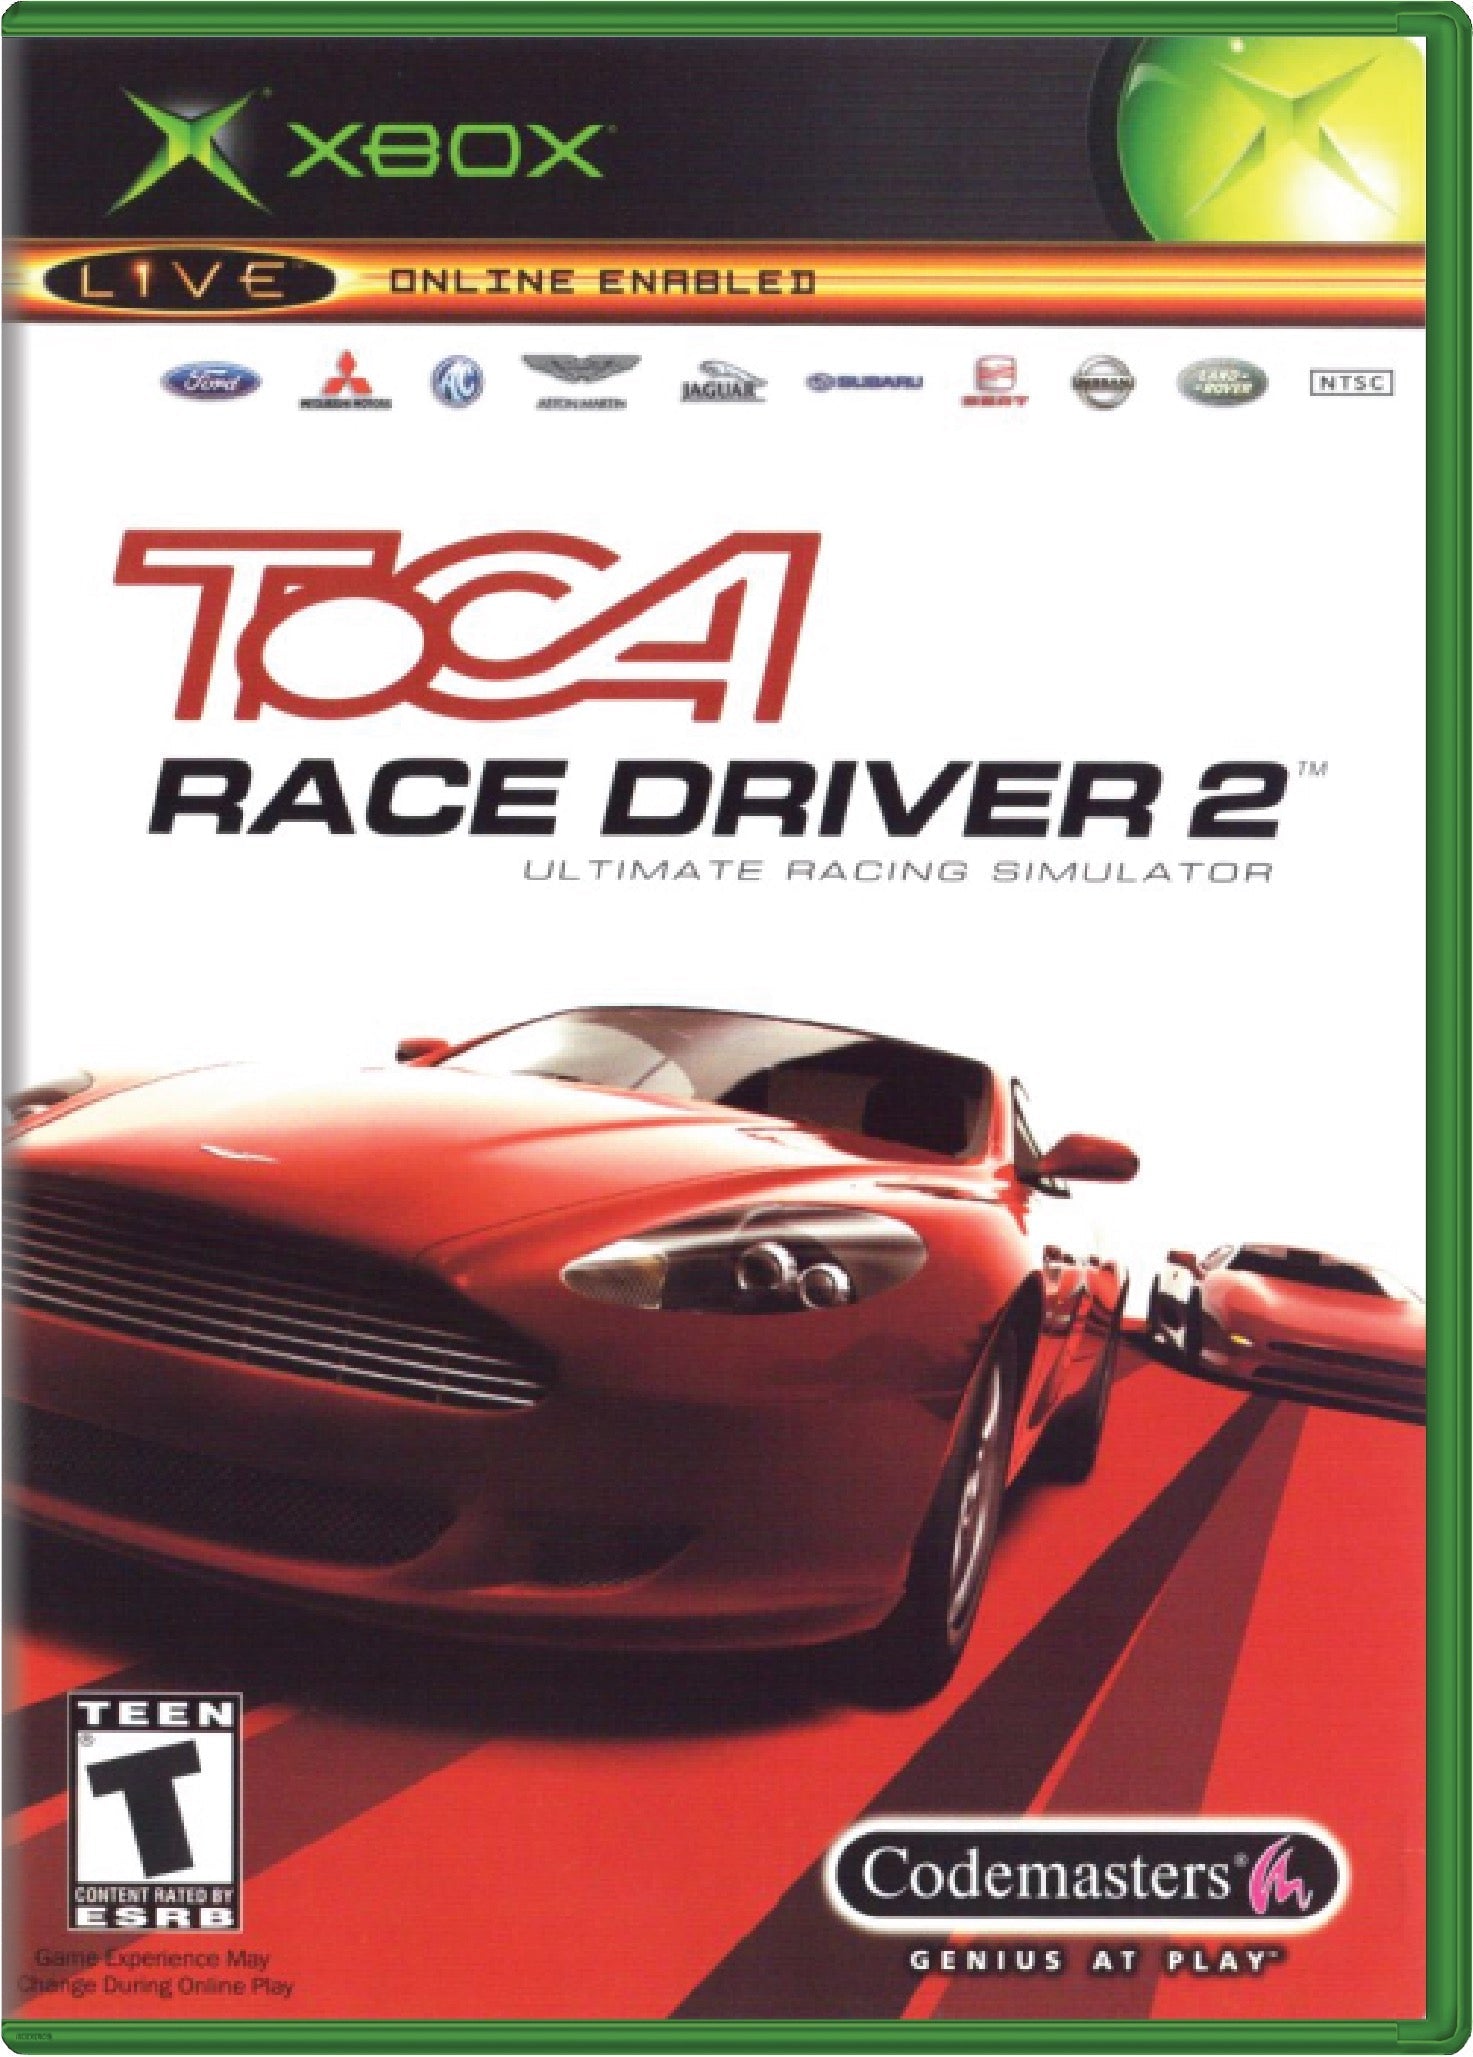 Toca Race Driver 2 Cover Art